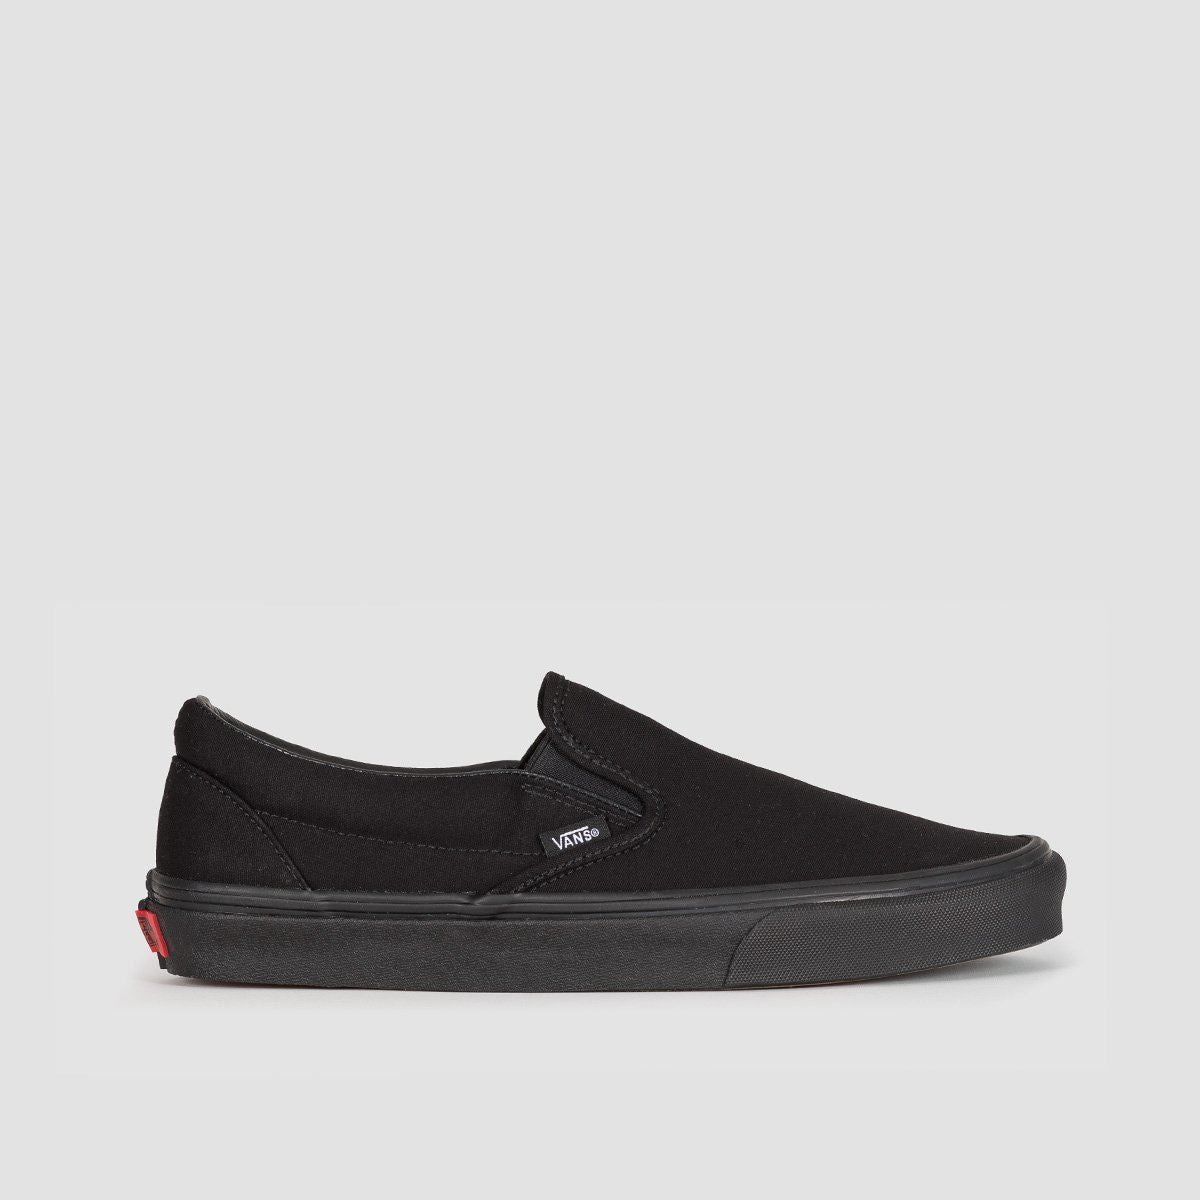 Vans Classic Slip-On Shoes - Black/Black